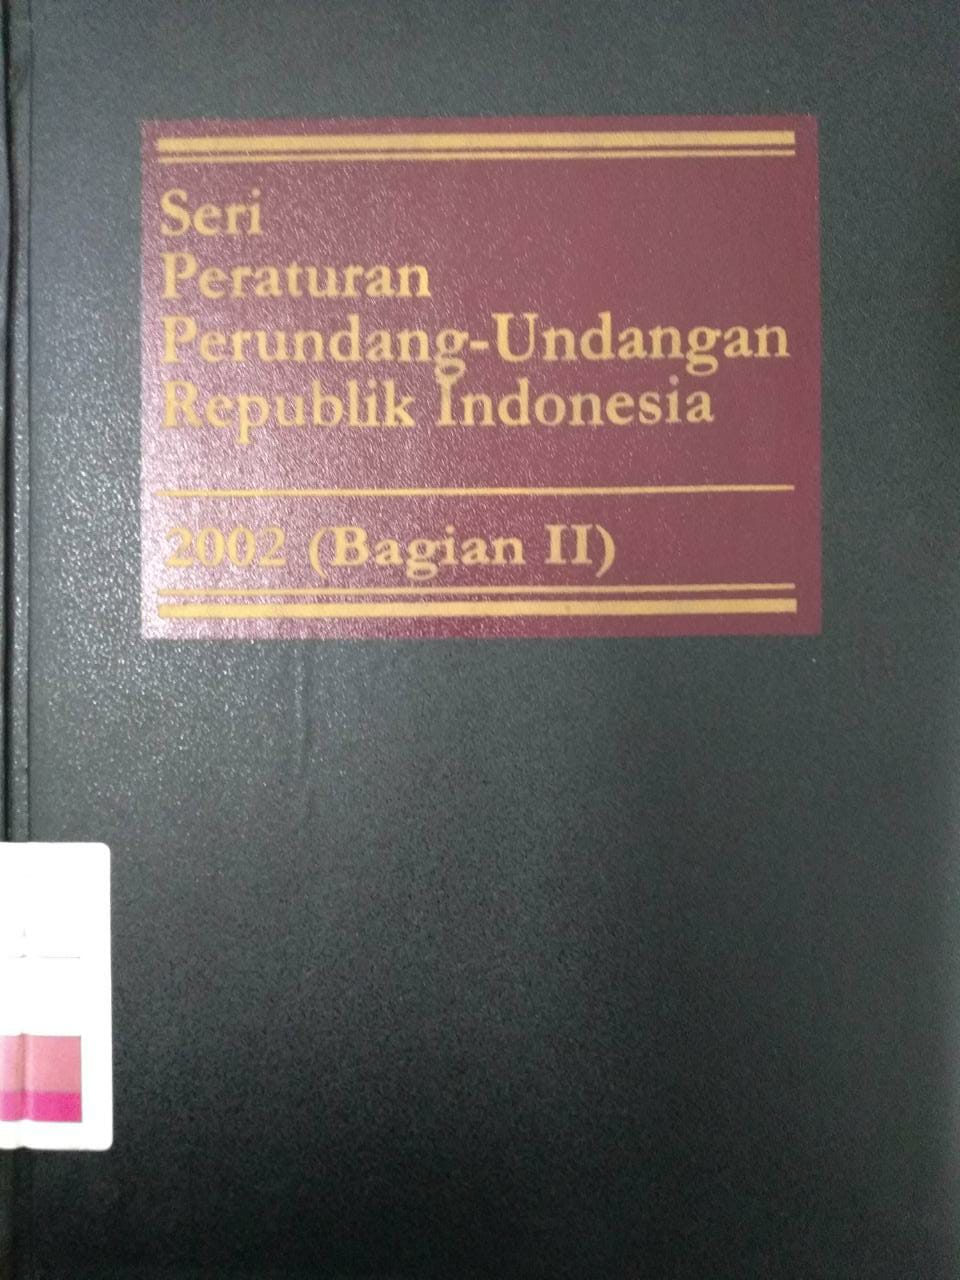 Seri Peraturan Perundang-undangan Republik Indonesia 2005 (Bagian I)